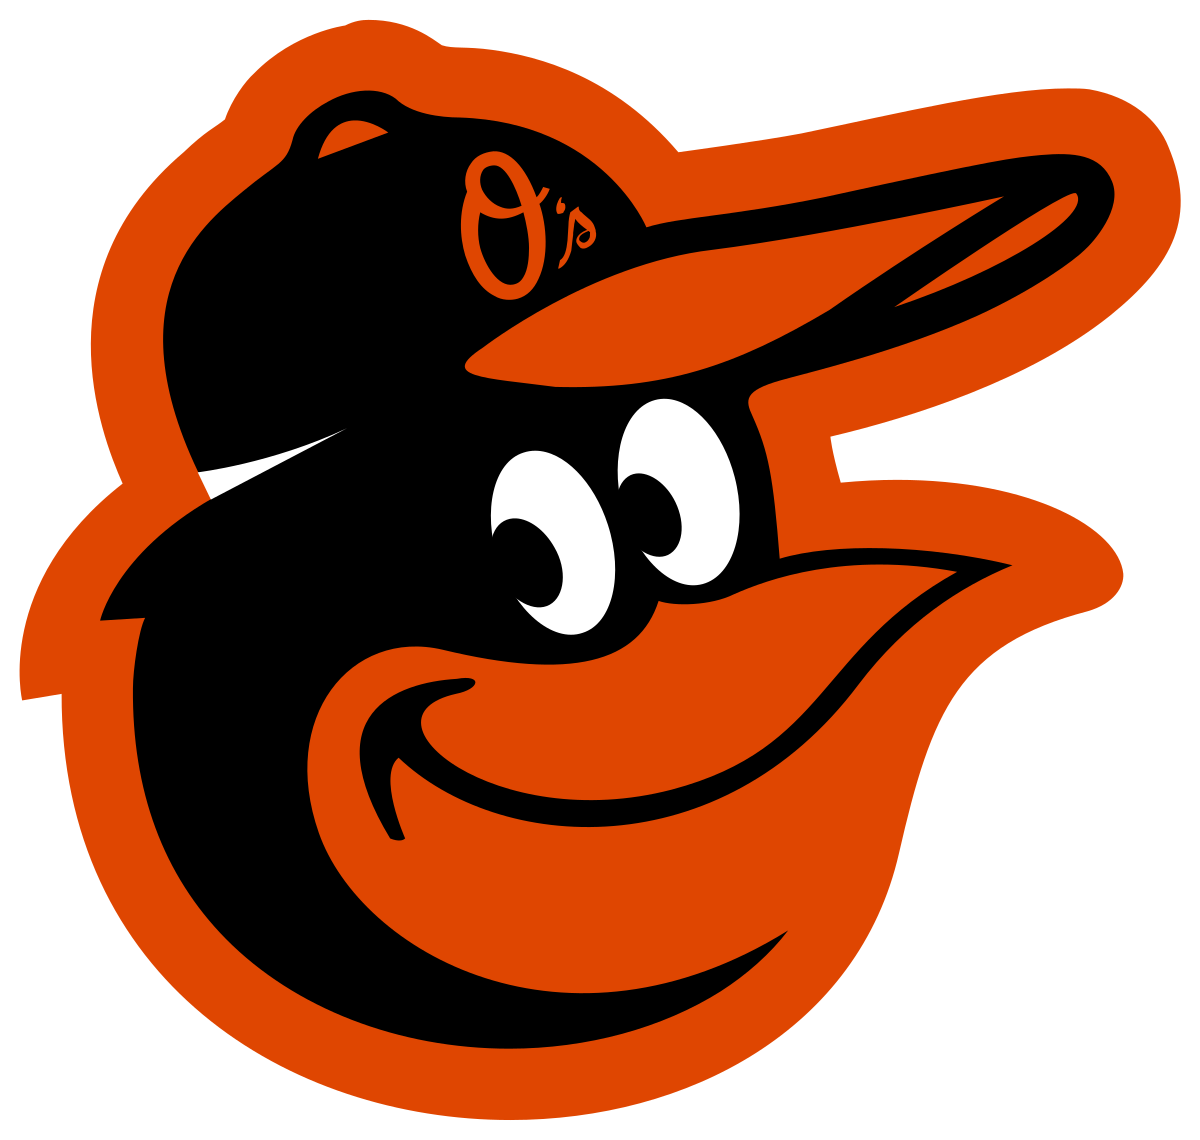 The Baltimore Orioles' awesome logo